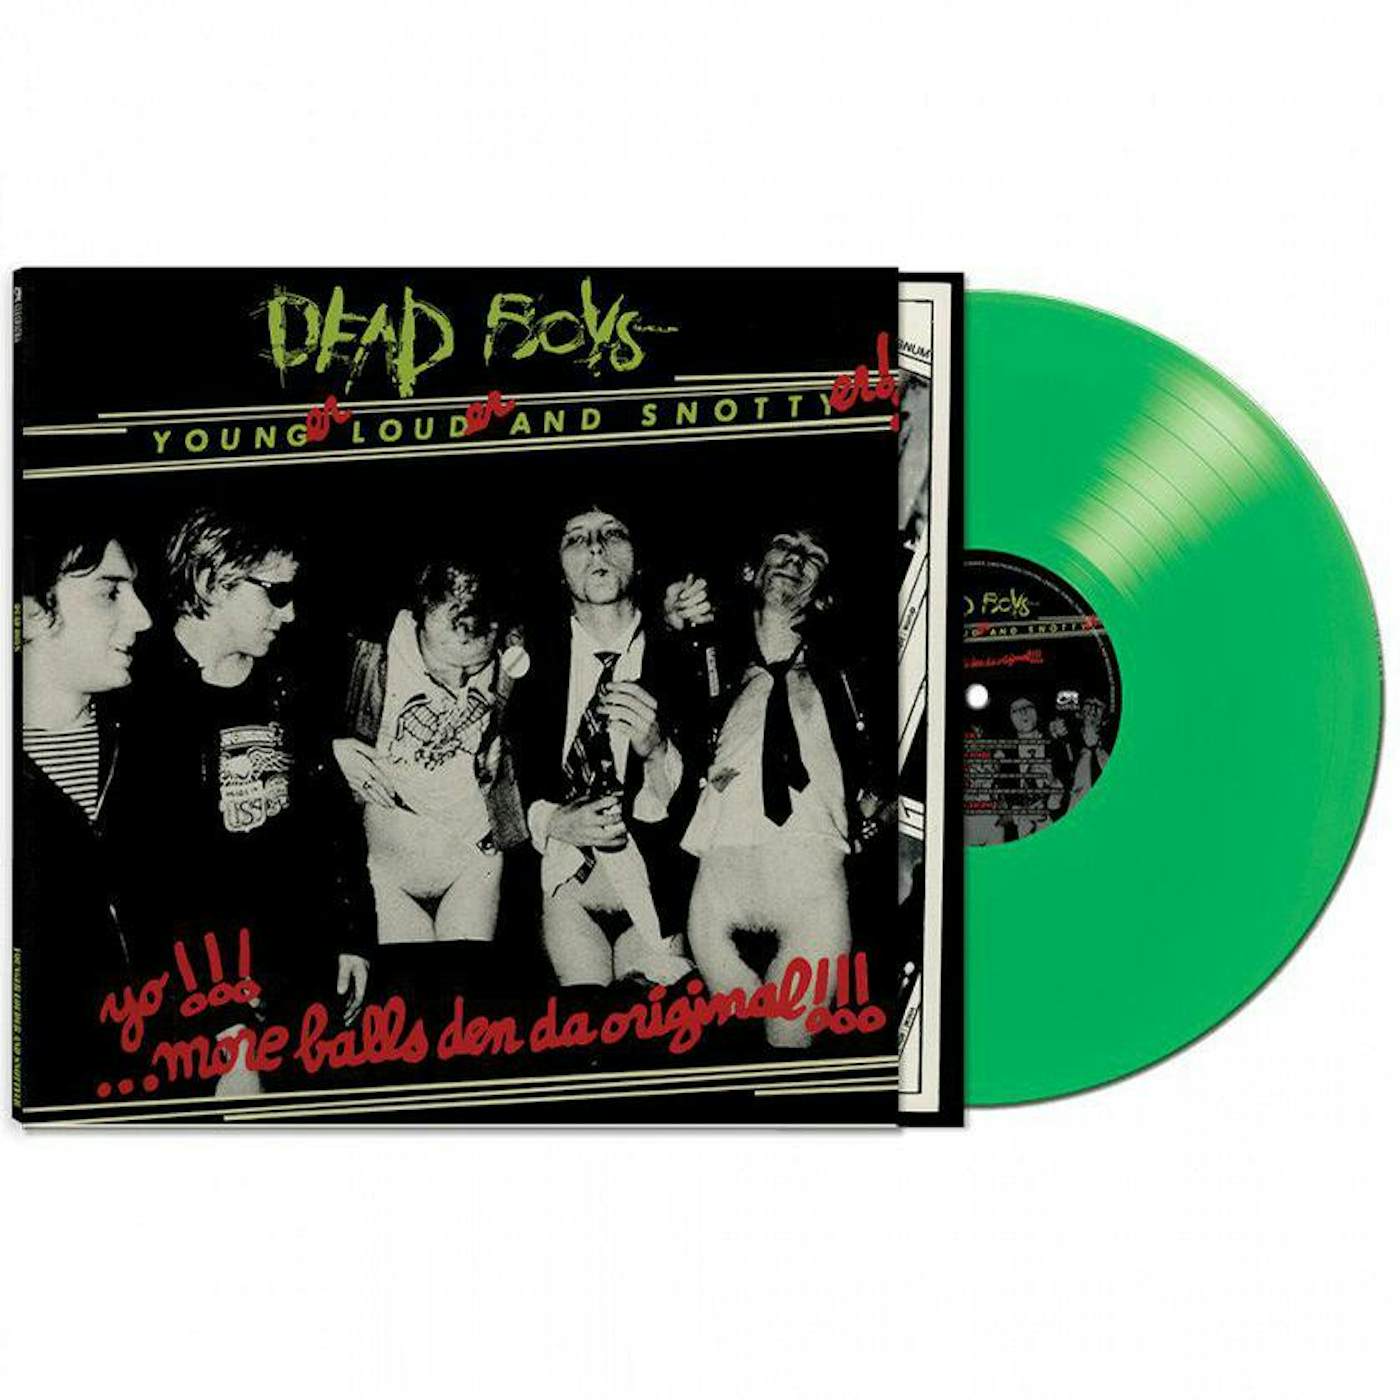 Dead Boys Younger Louder & Snottyer (Green/Reissue) Vinyl Record